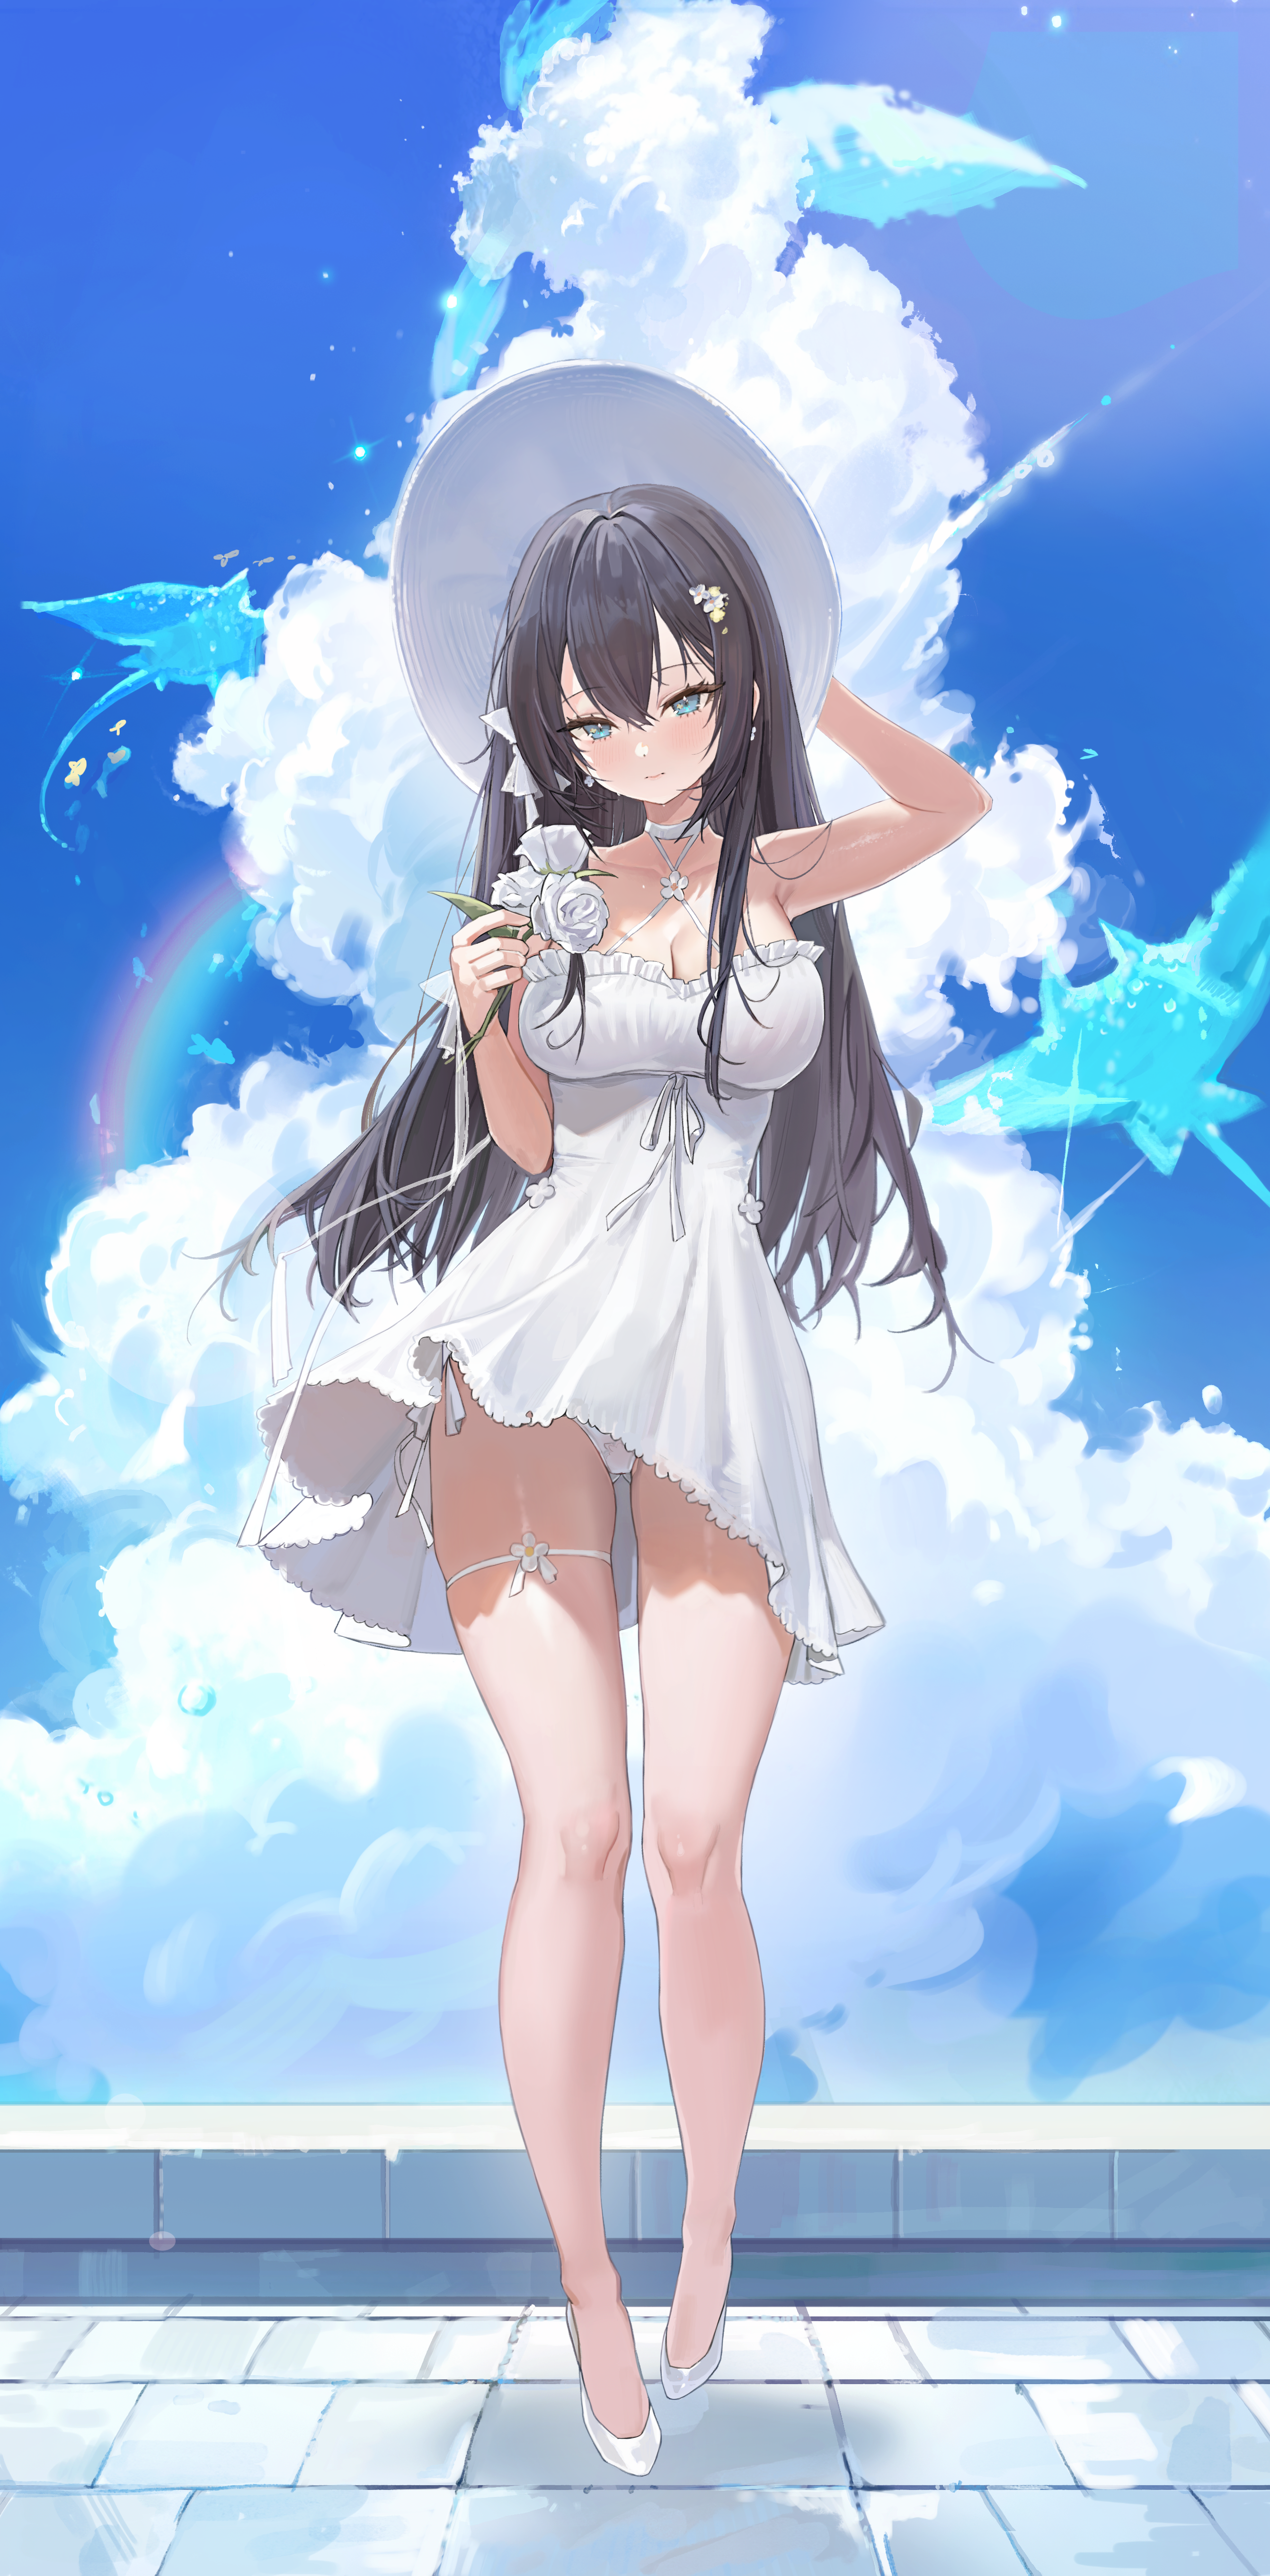 Anime 2683x5440 anime anime girls hat dress panties clouds fish animals rainbows upskirt sun dress artwork Freng